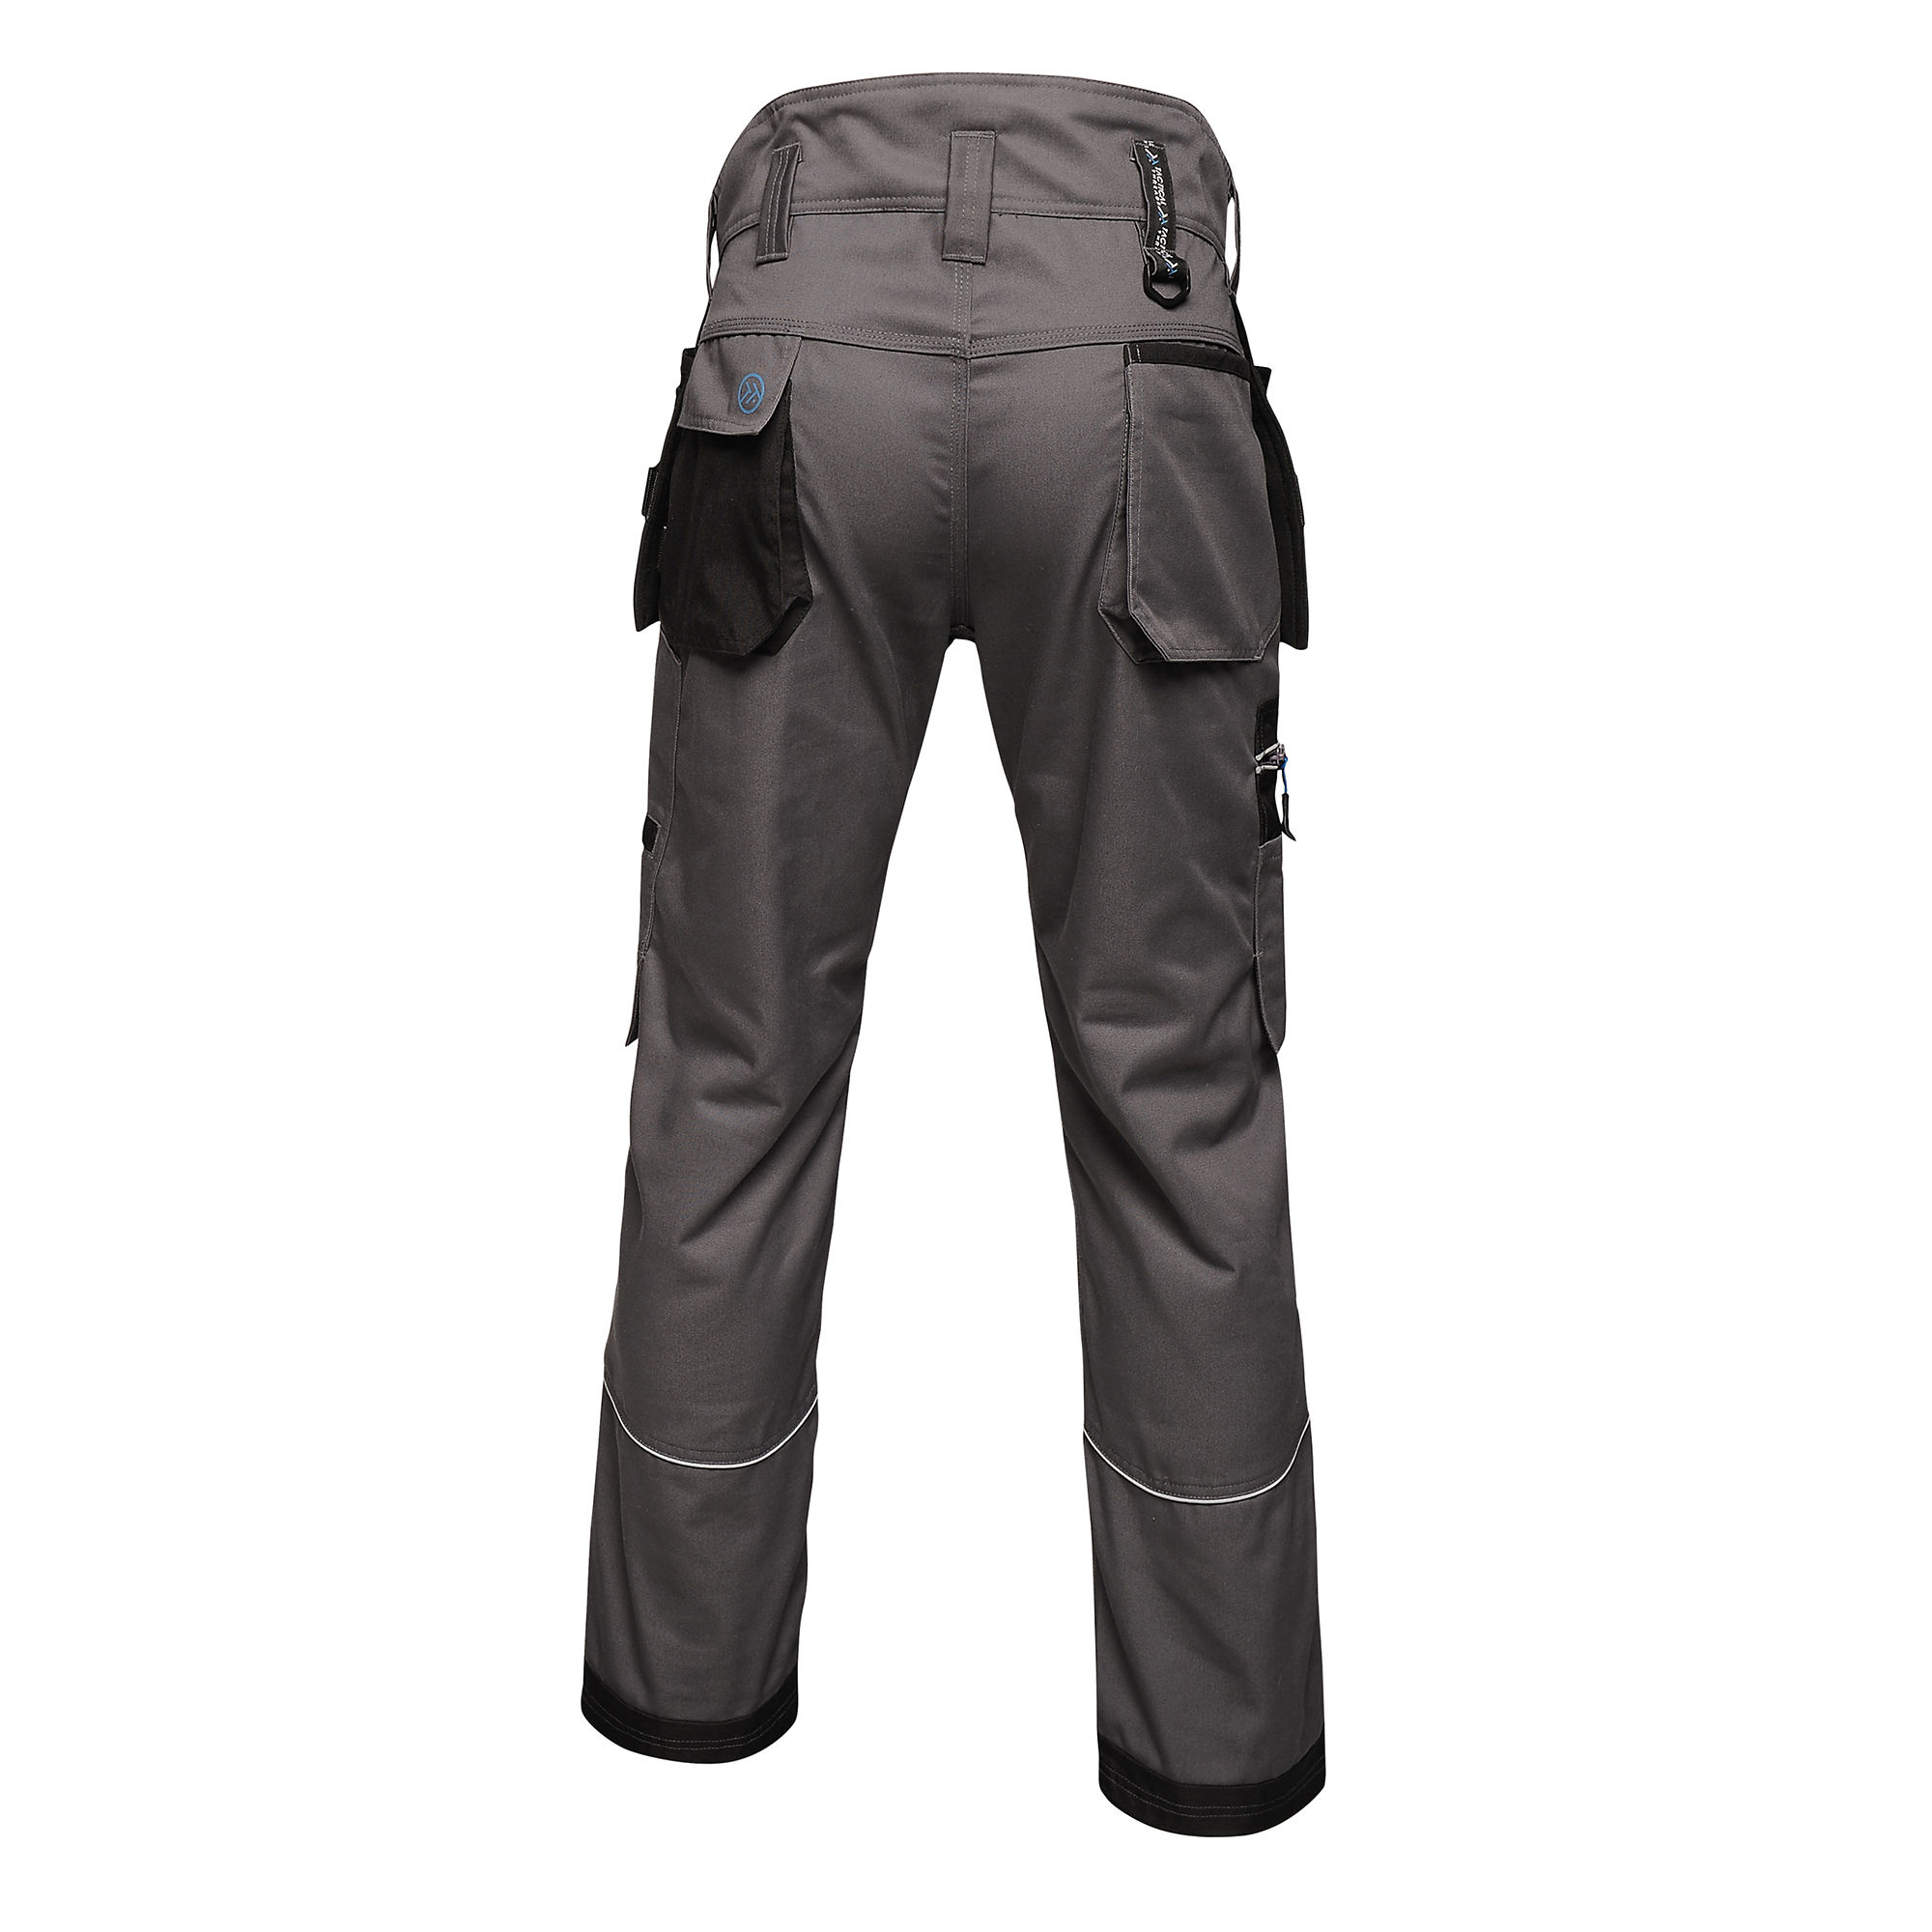 Regatta Work Trousers Action Professional Pants Multi Pocket Zip Water  Repellent | eBay